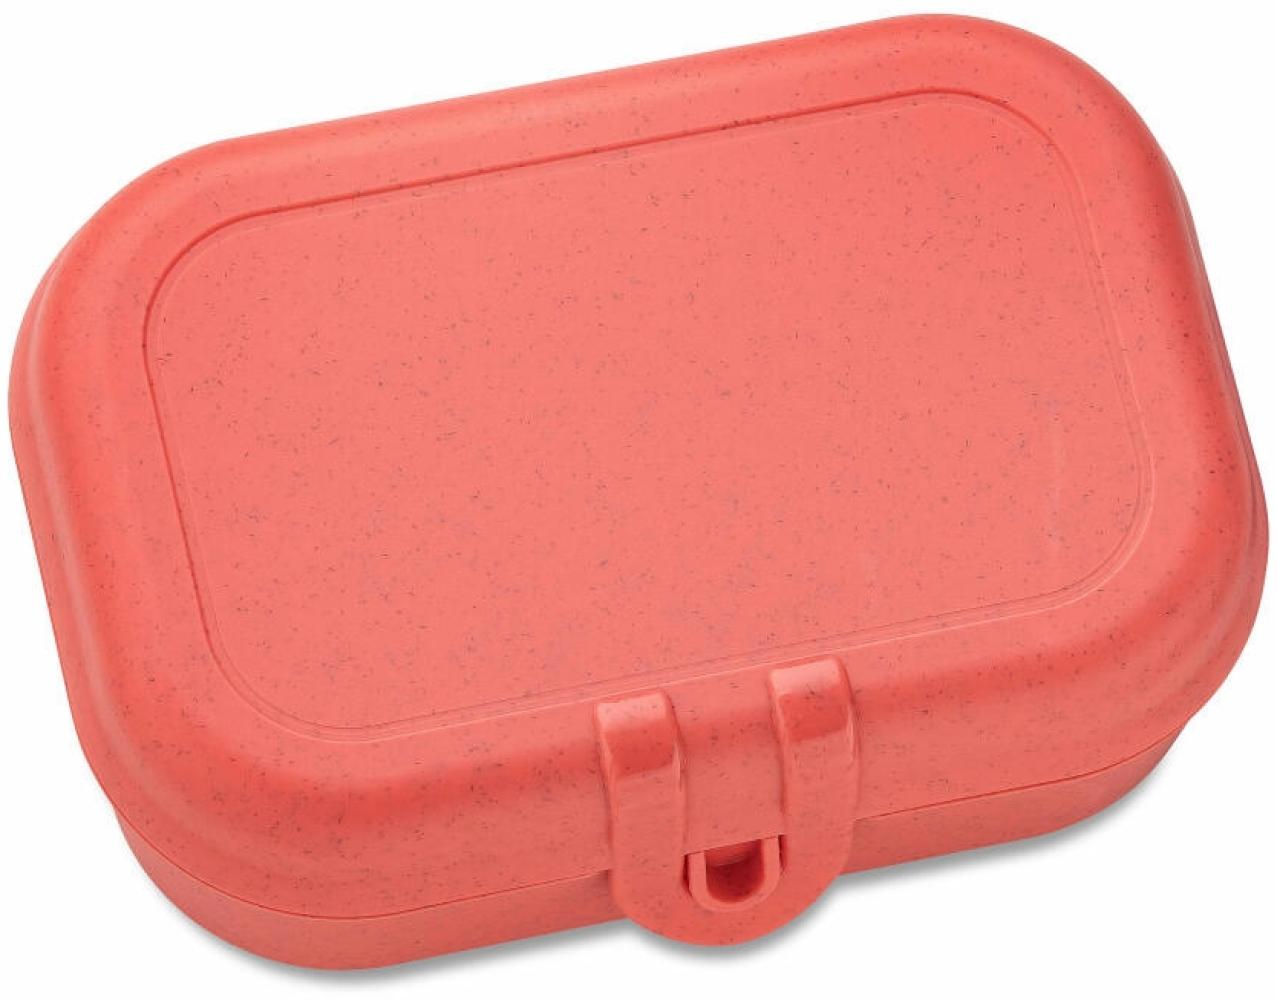 Koziol Lunchbox Pascal S, Brotdose, Kunststoff, Nature Coral, 7158704 Bild 1